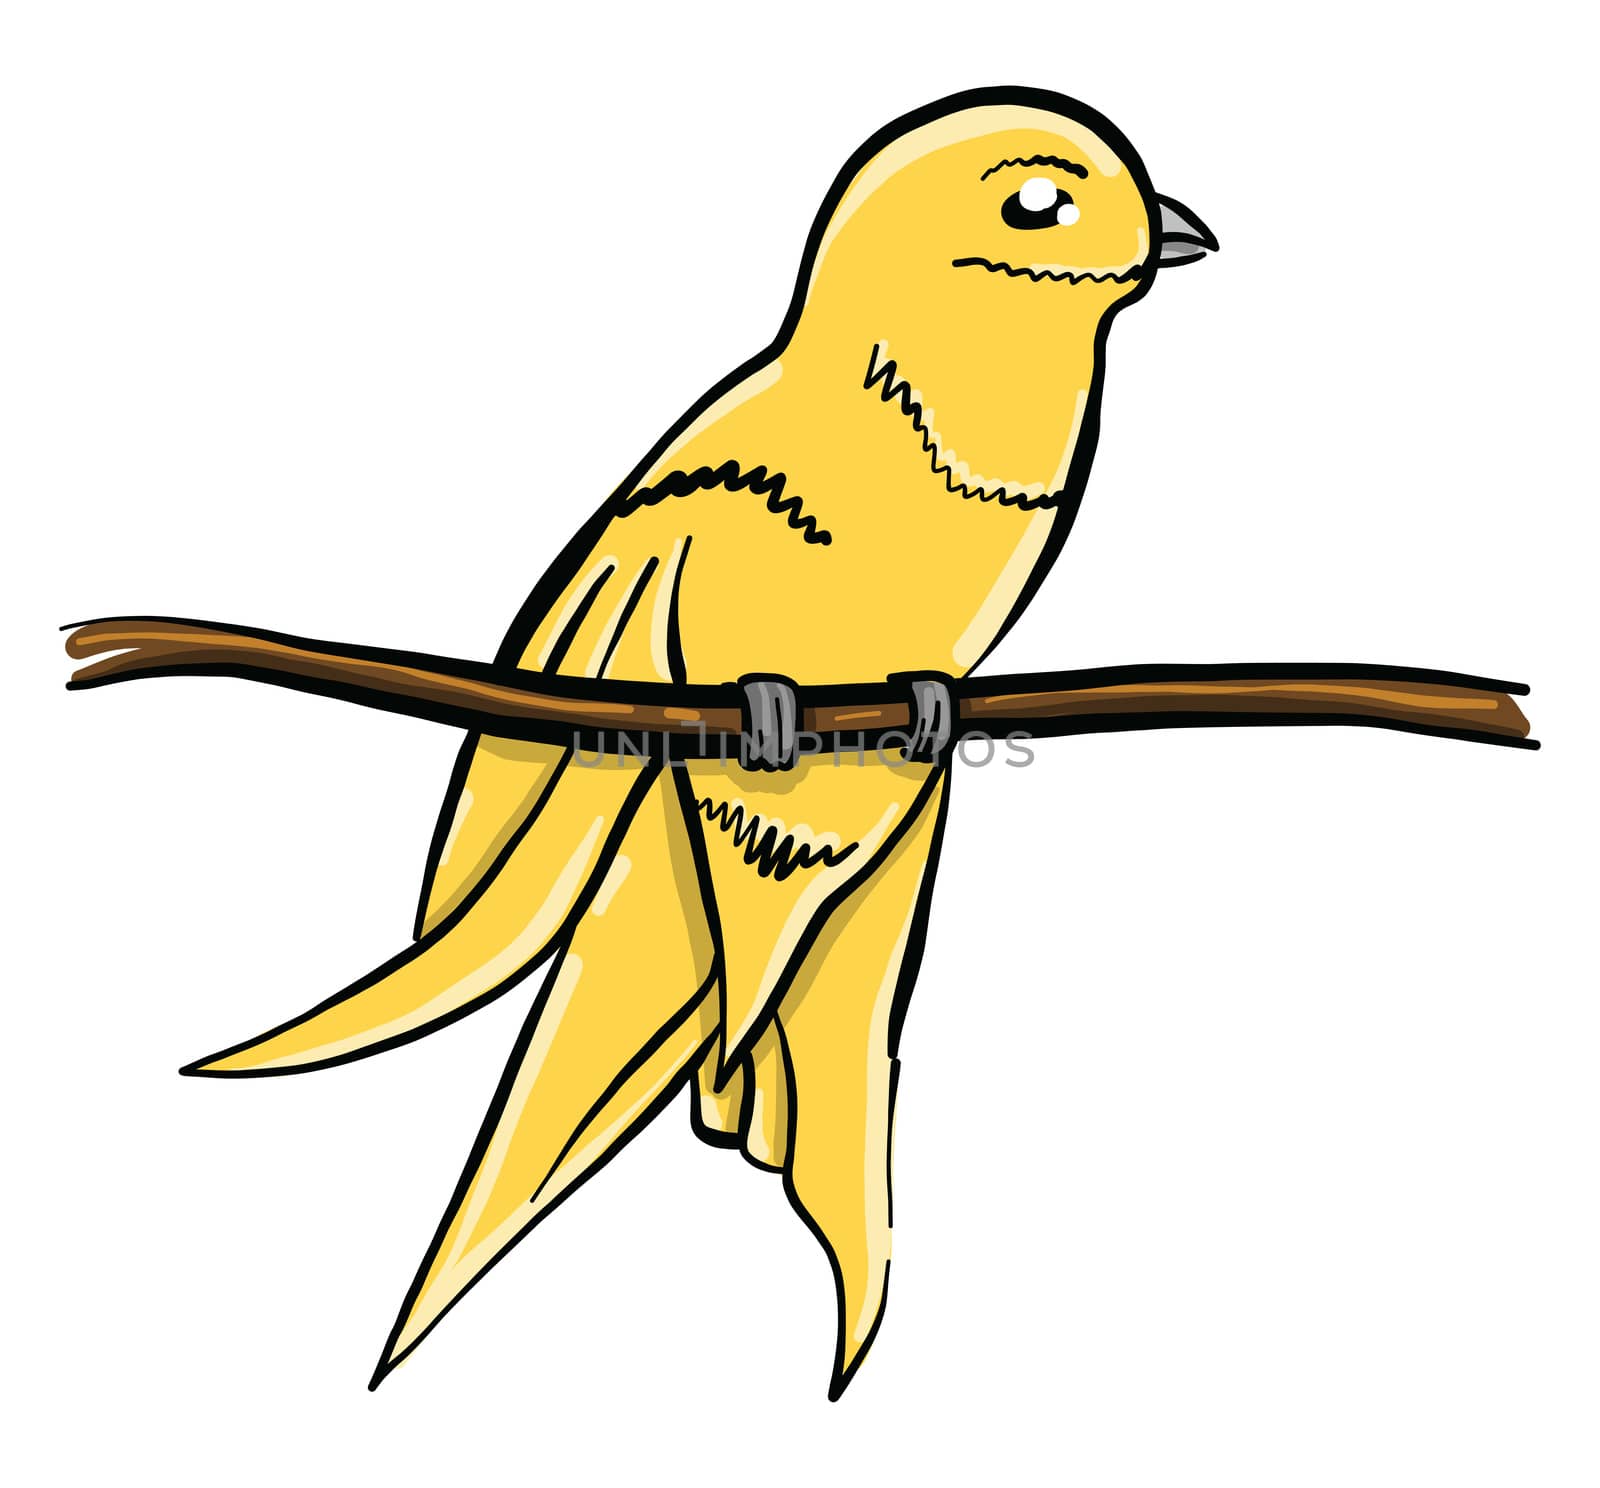 Yelow bird on branch , illustration, vector on white background